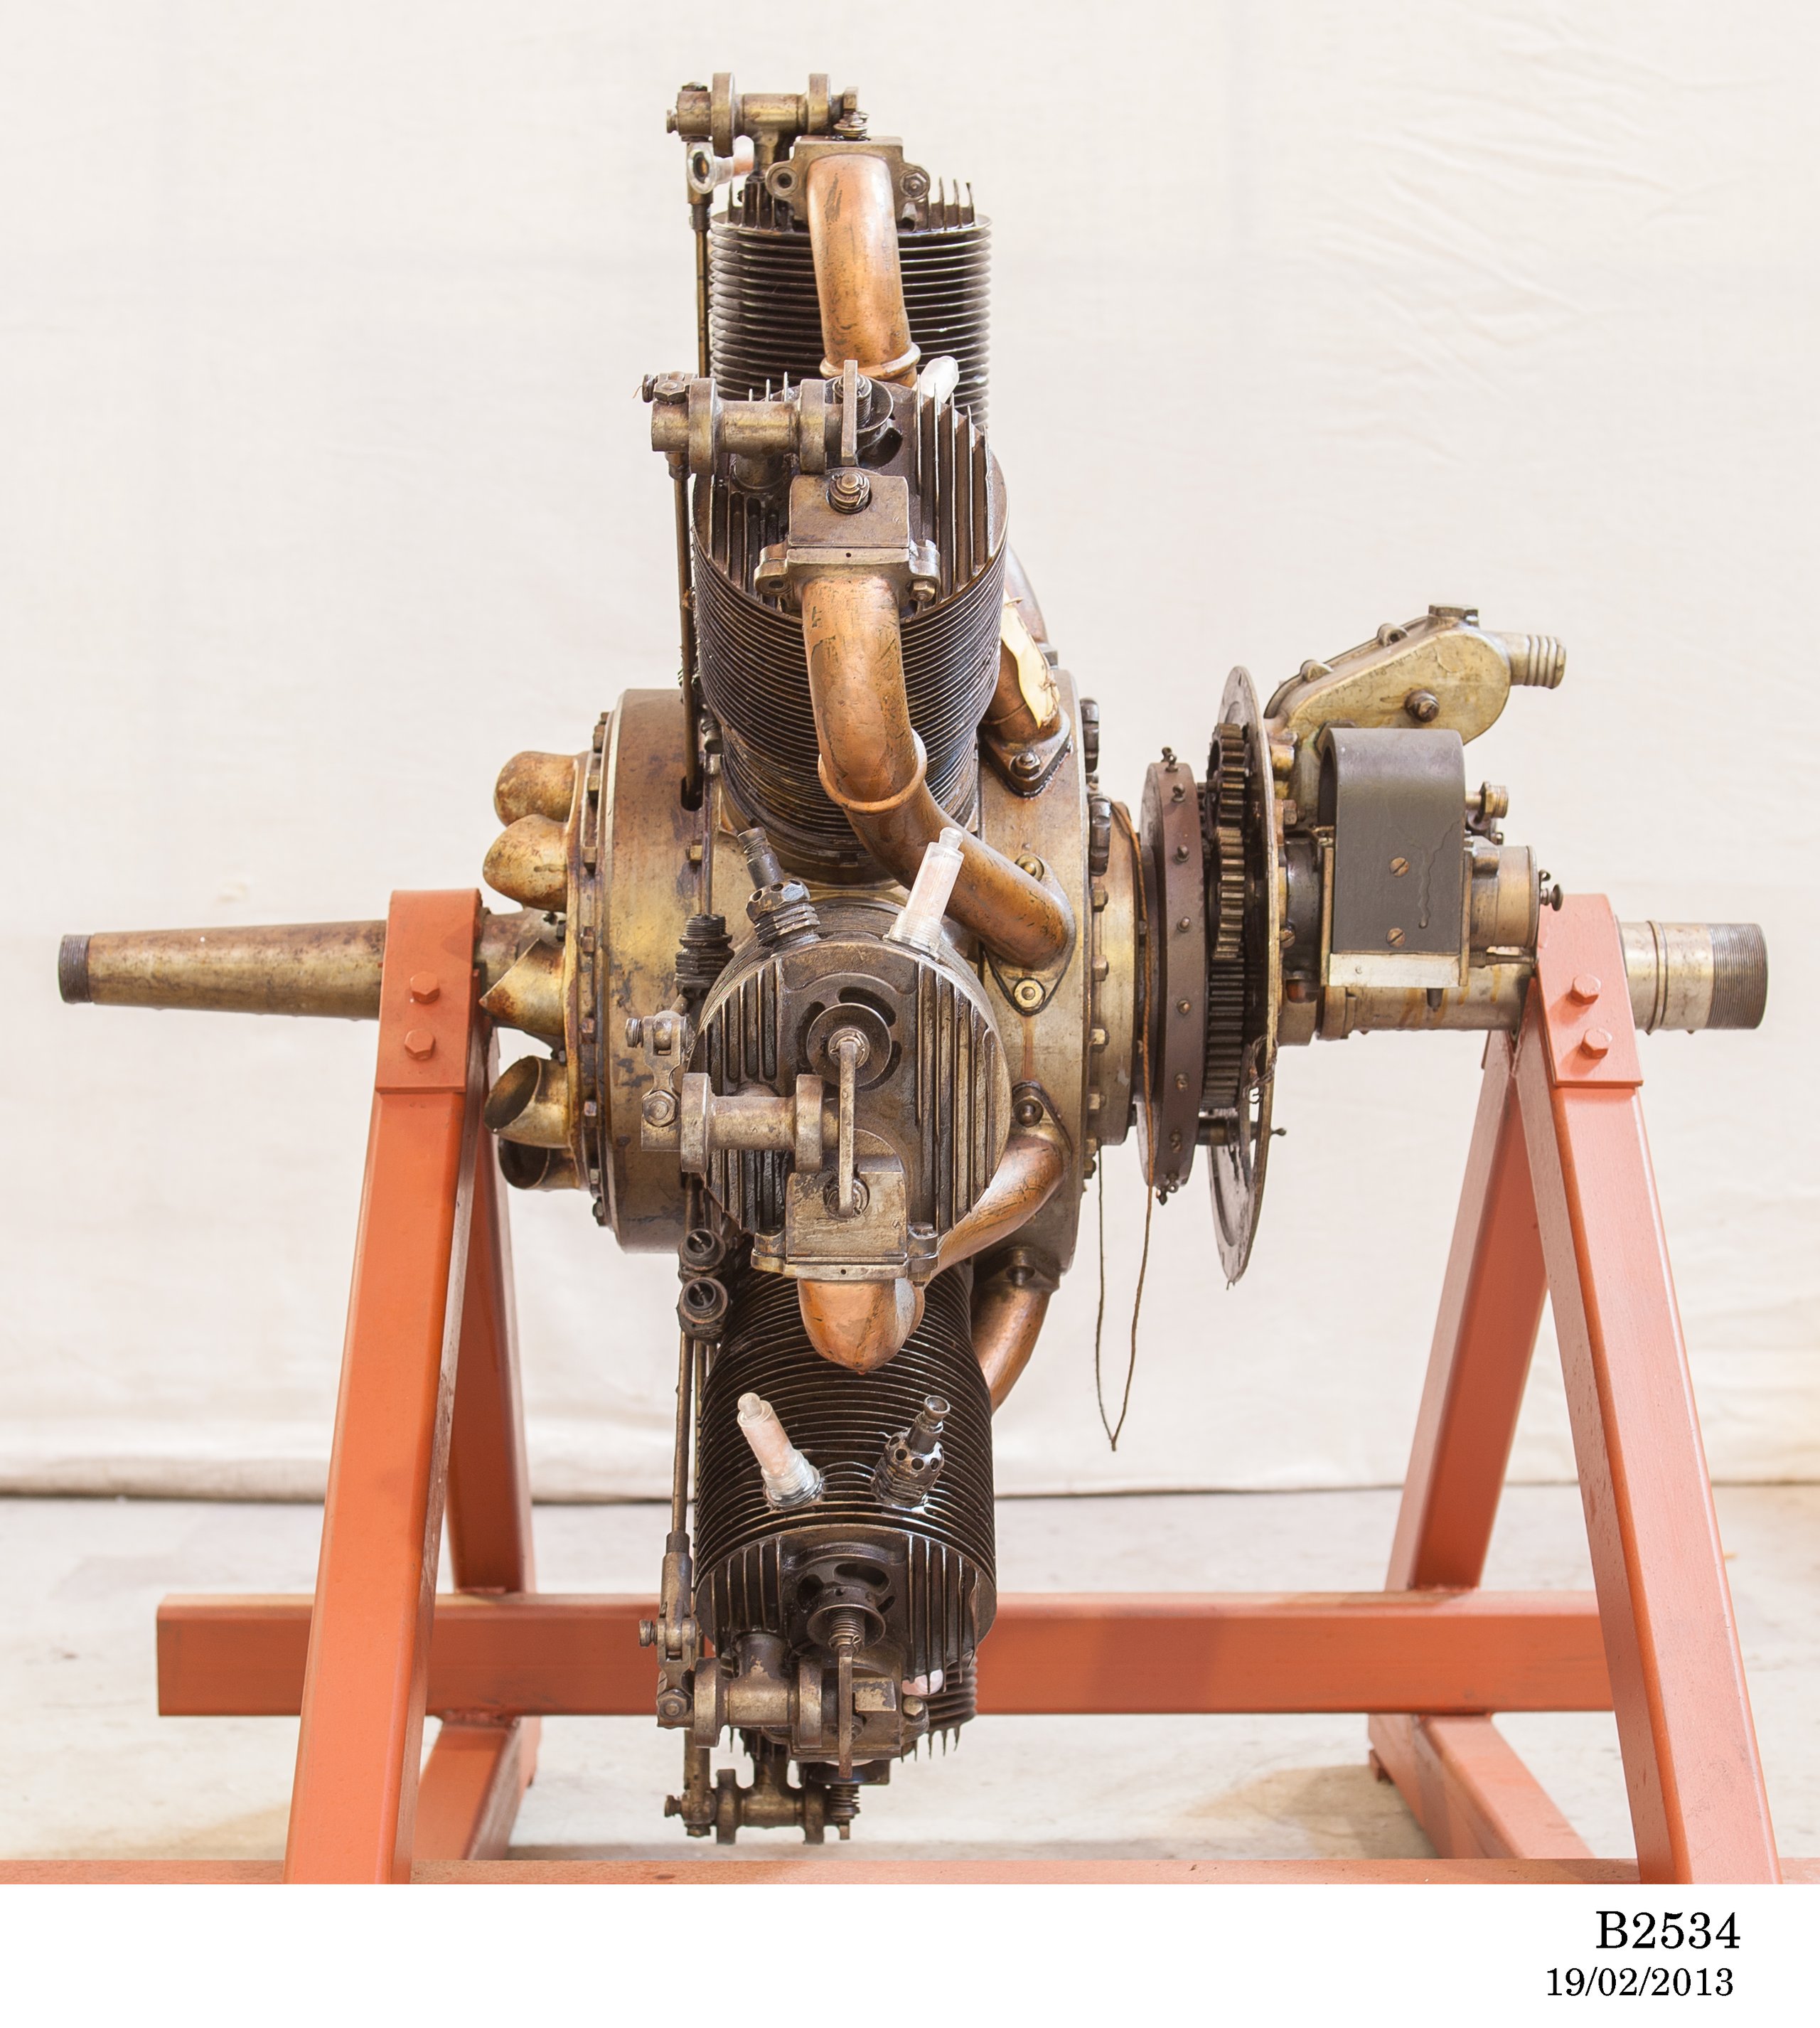 Le Rhone rotary aero engine